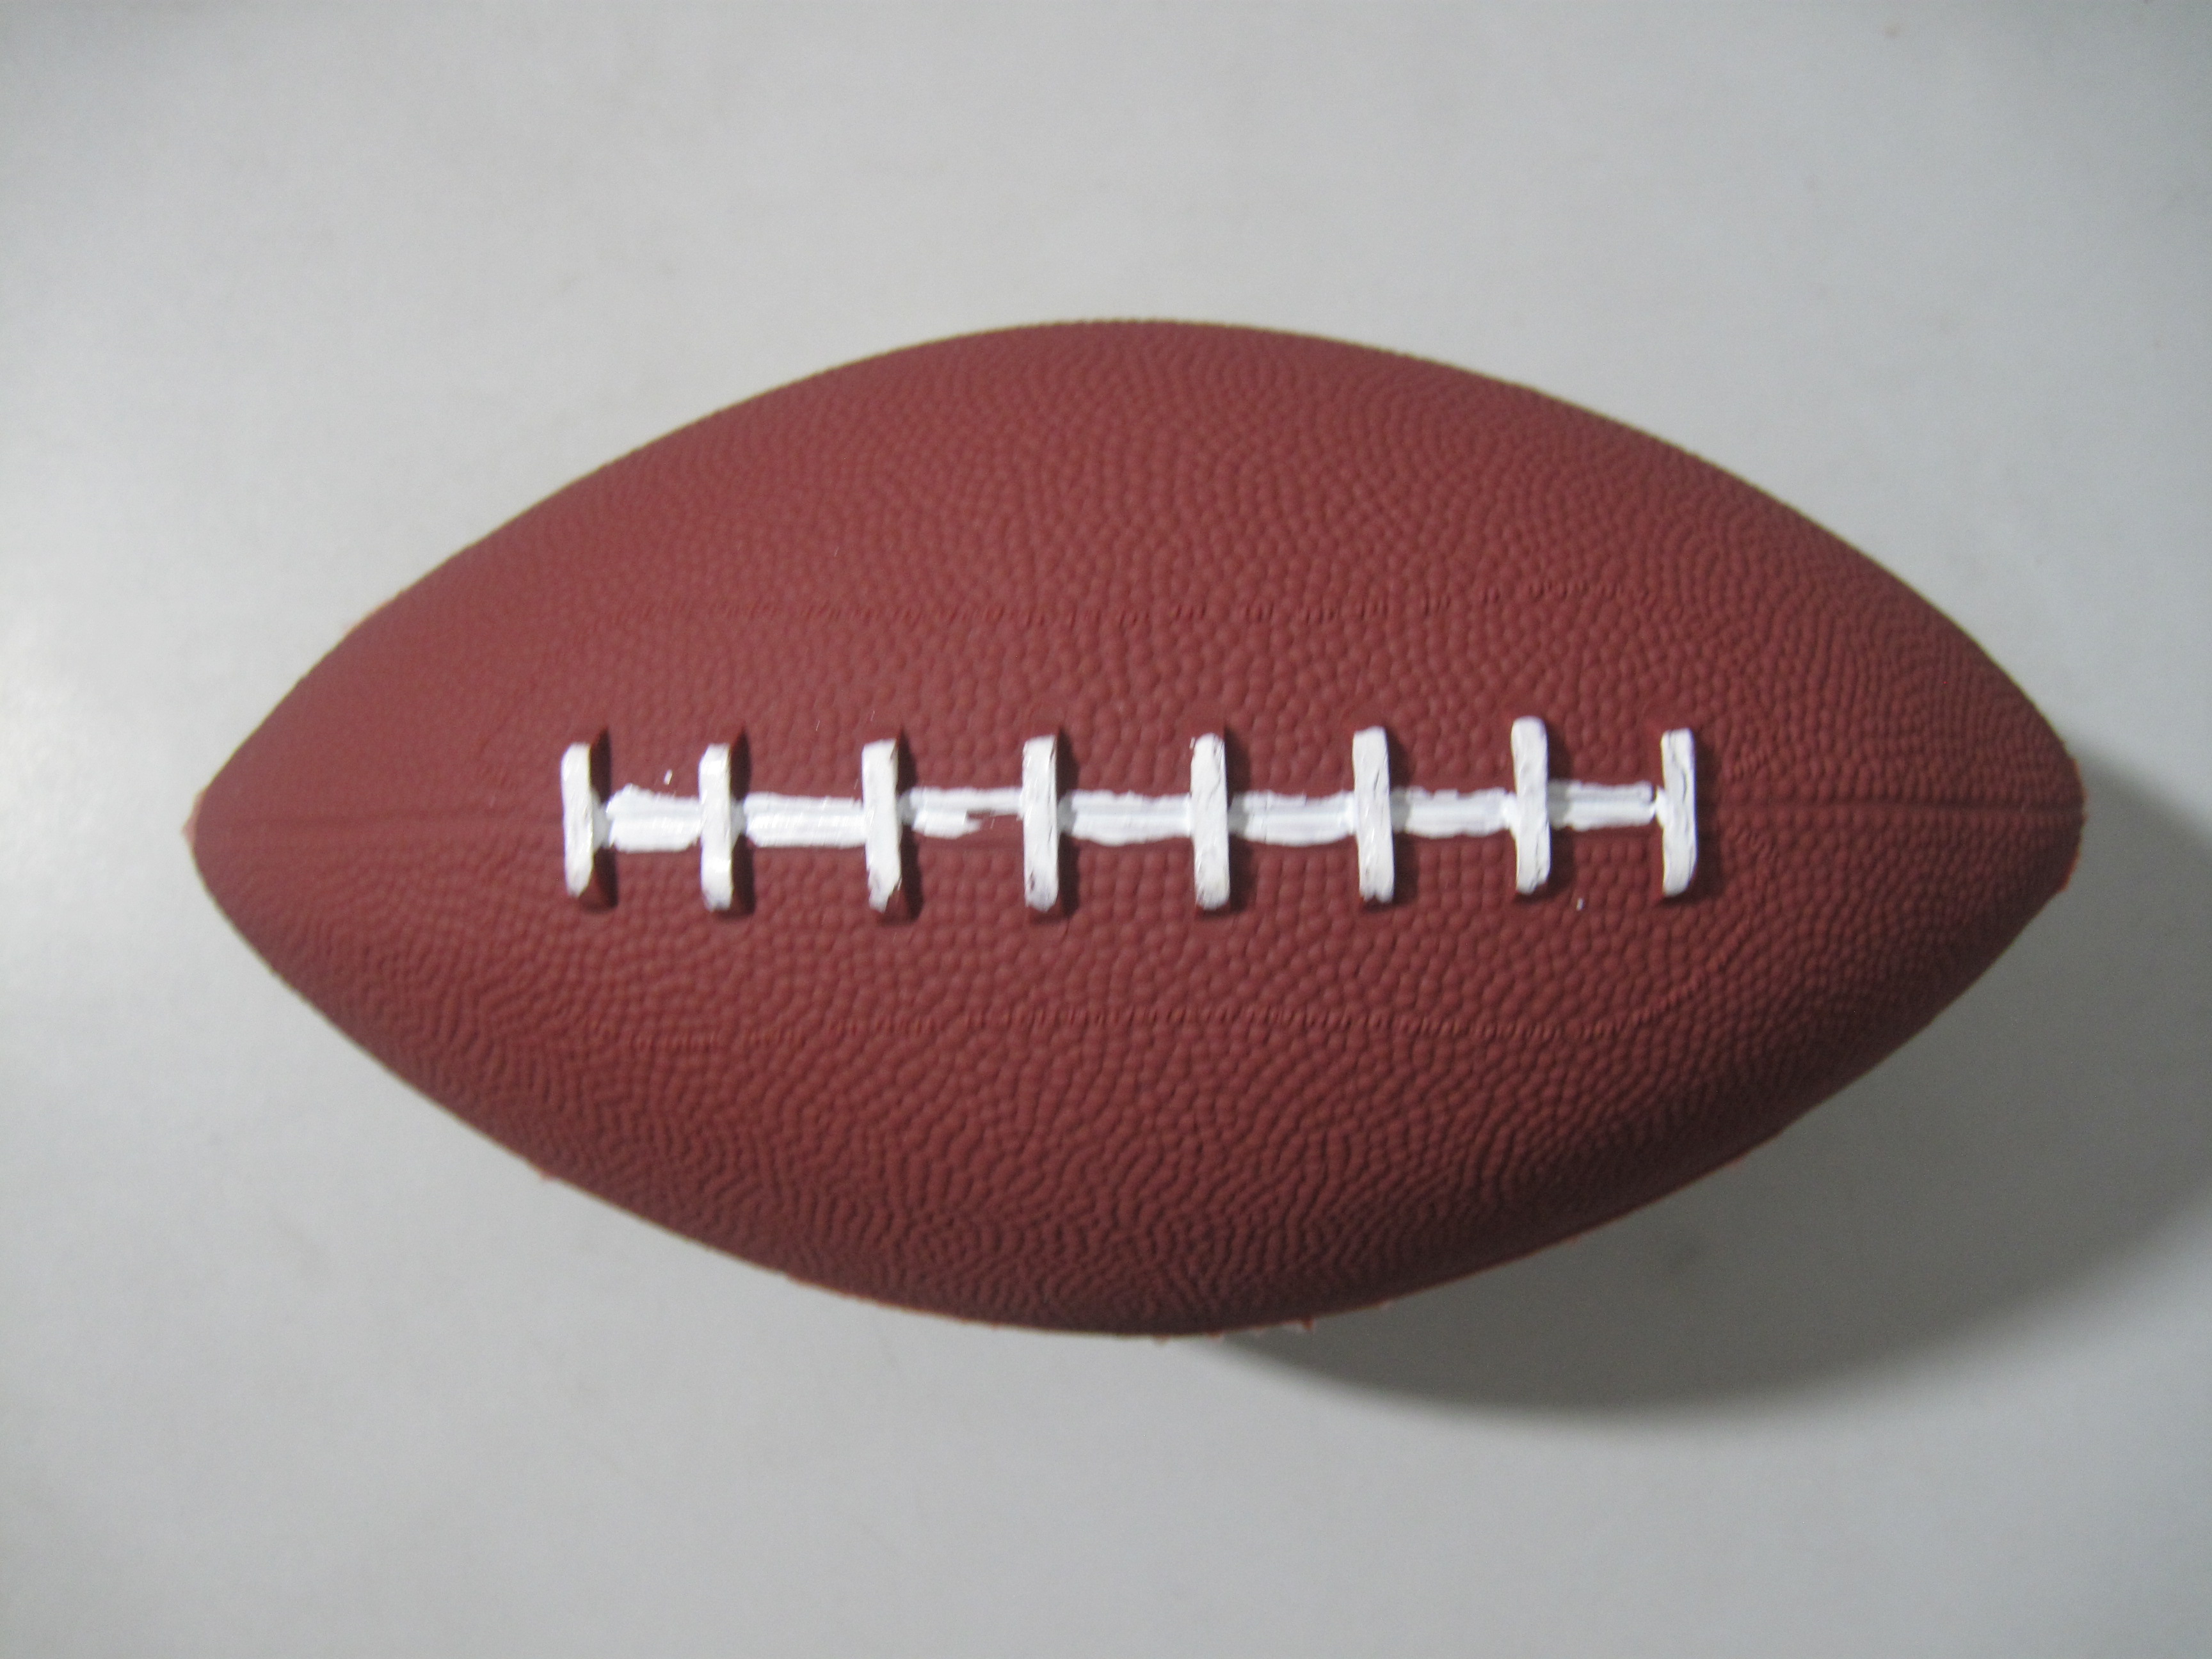 American Football / Rugby Ball–Outdoor ug Indoor Sport Balls